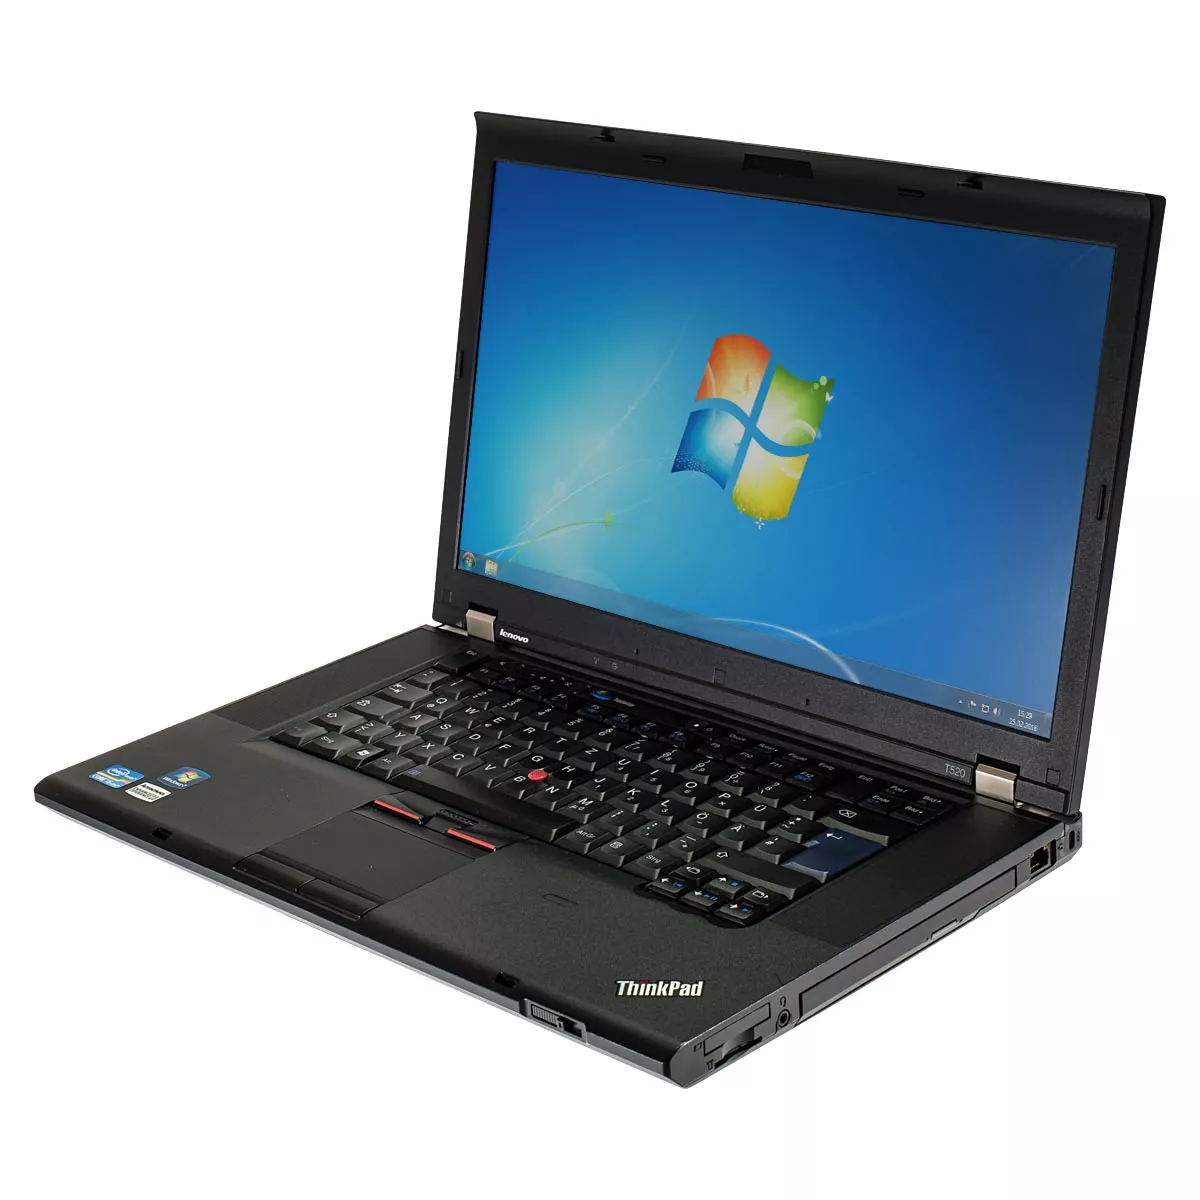 Lenovo ThinkPad W510 Quad Core i7 720Q 1,60 GHz Webcam